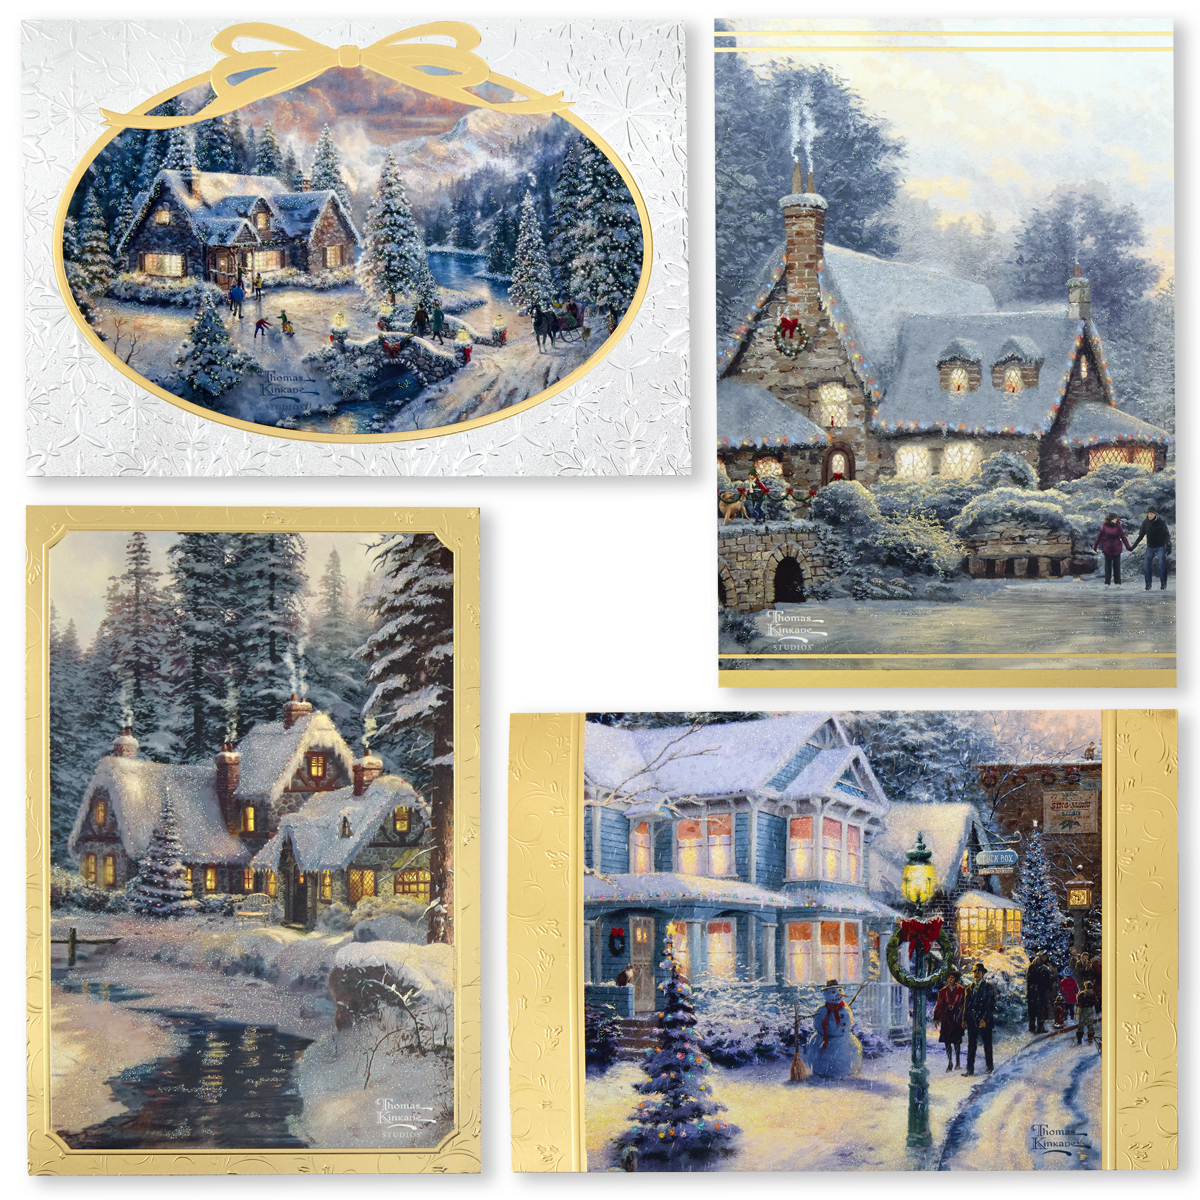 Hallmark Hand Crafted Christmas Card Assortment: Thomas Kinkade - 40 Pack